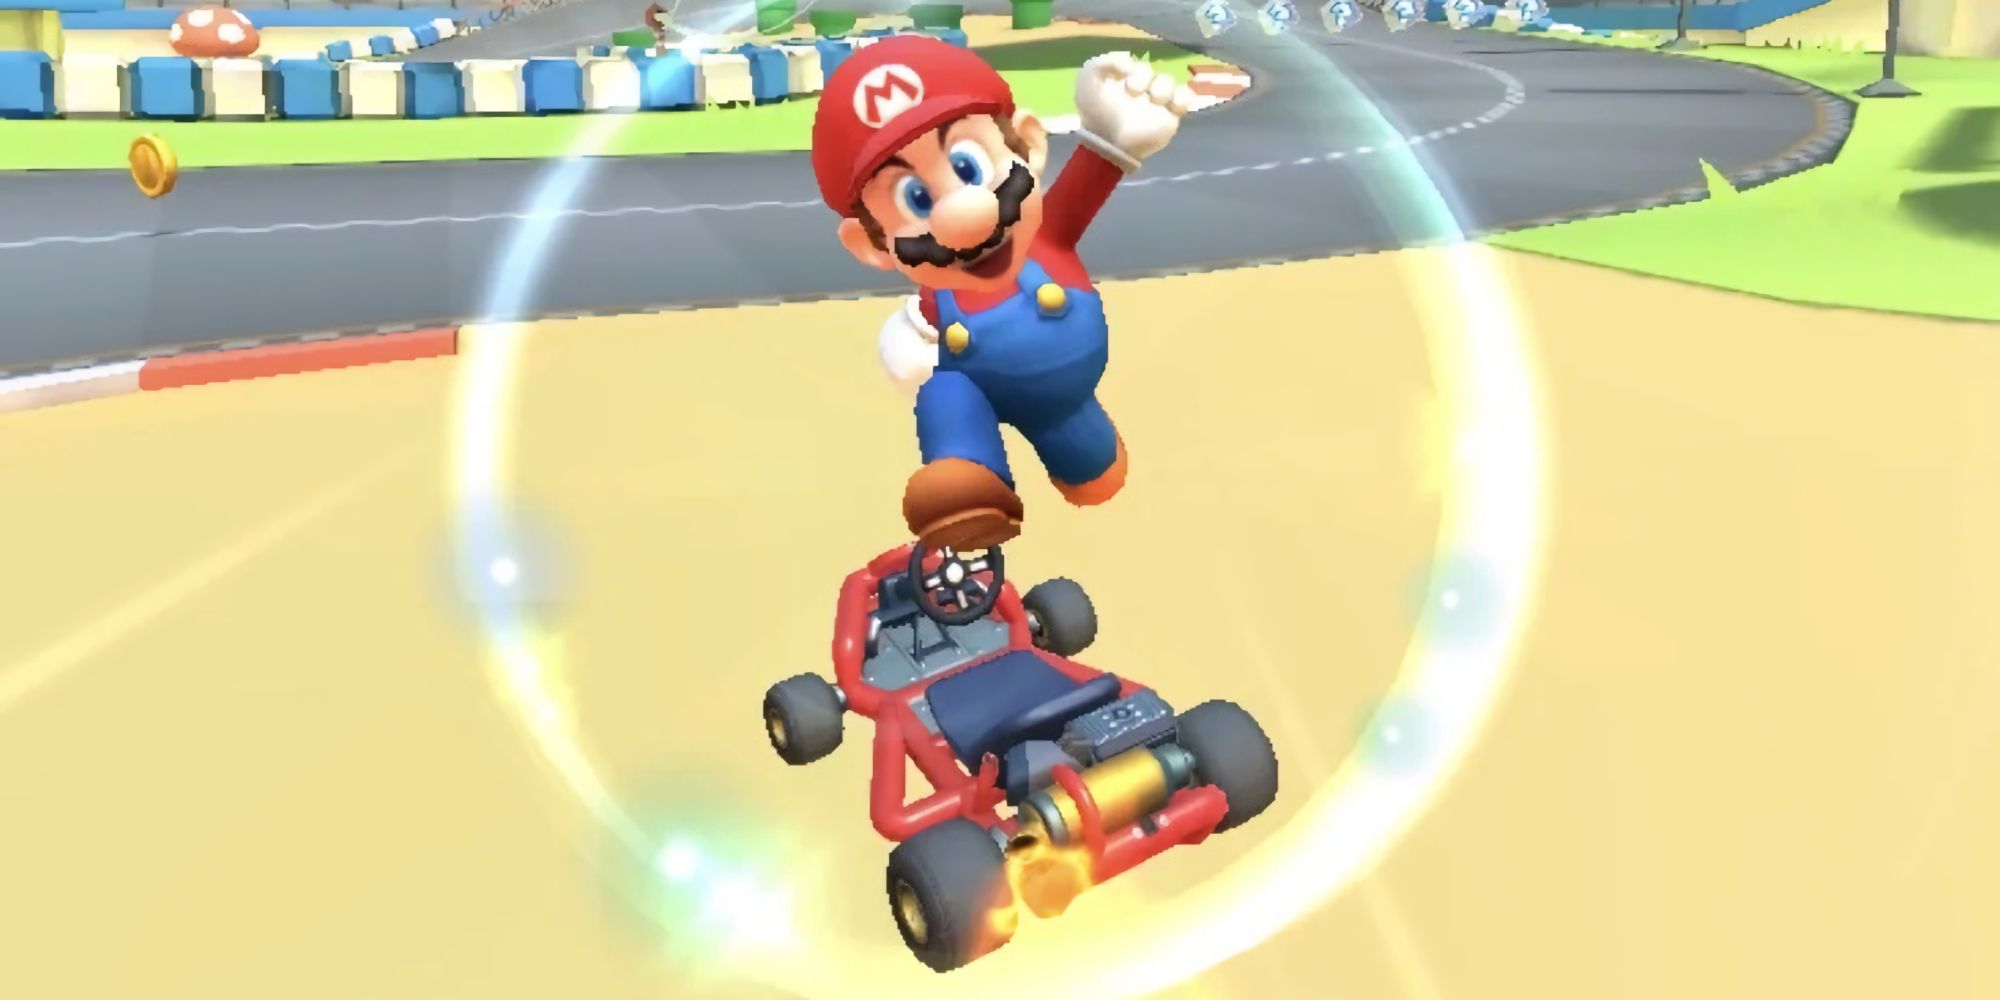 Mario Kart Tour Mario Performing a Trick on Toad Circuit